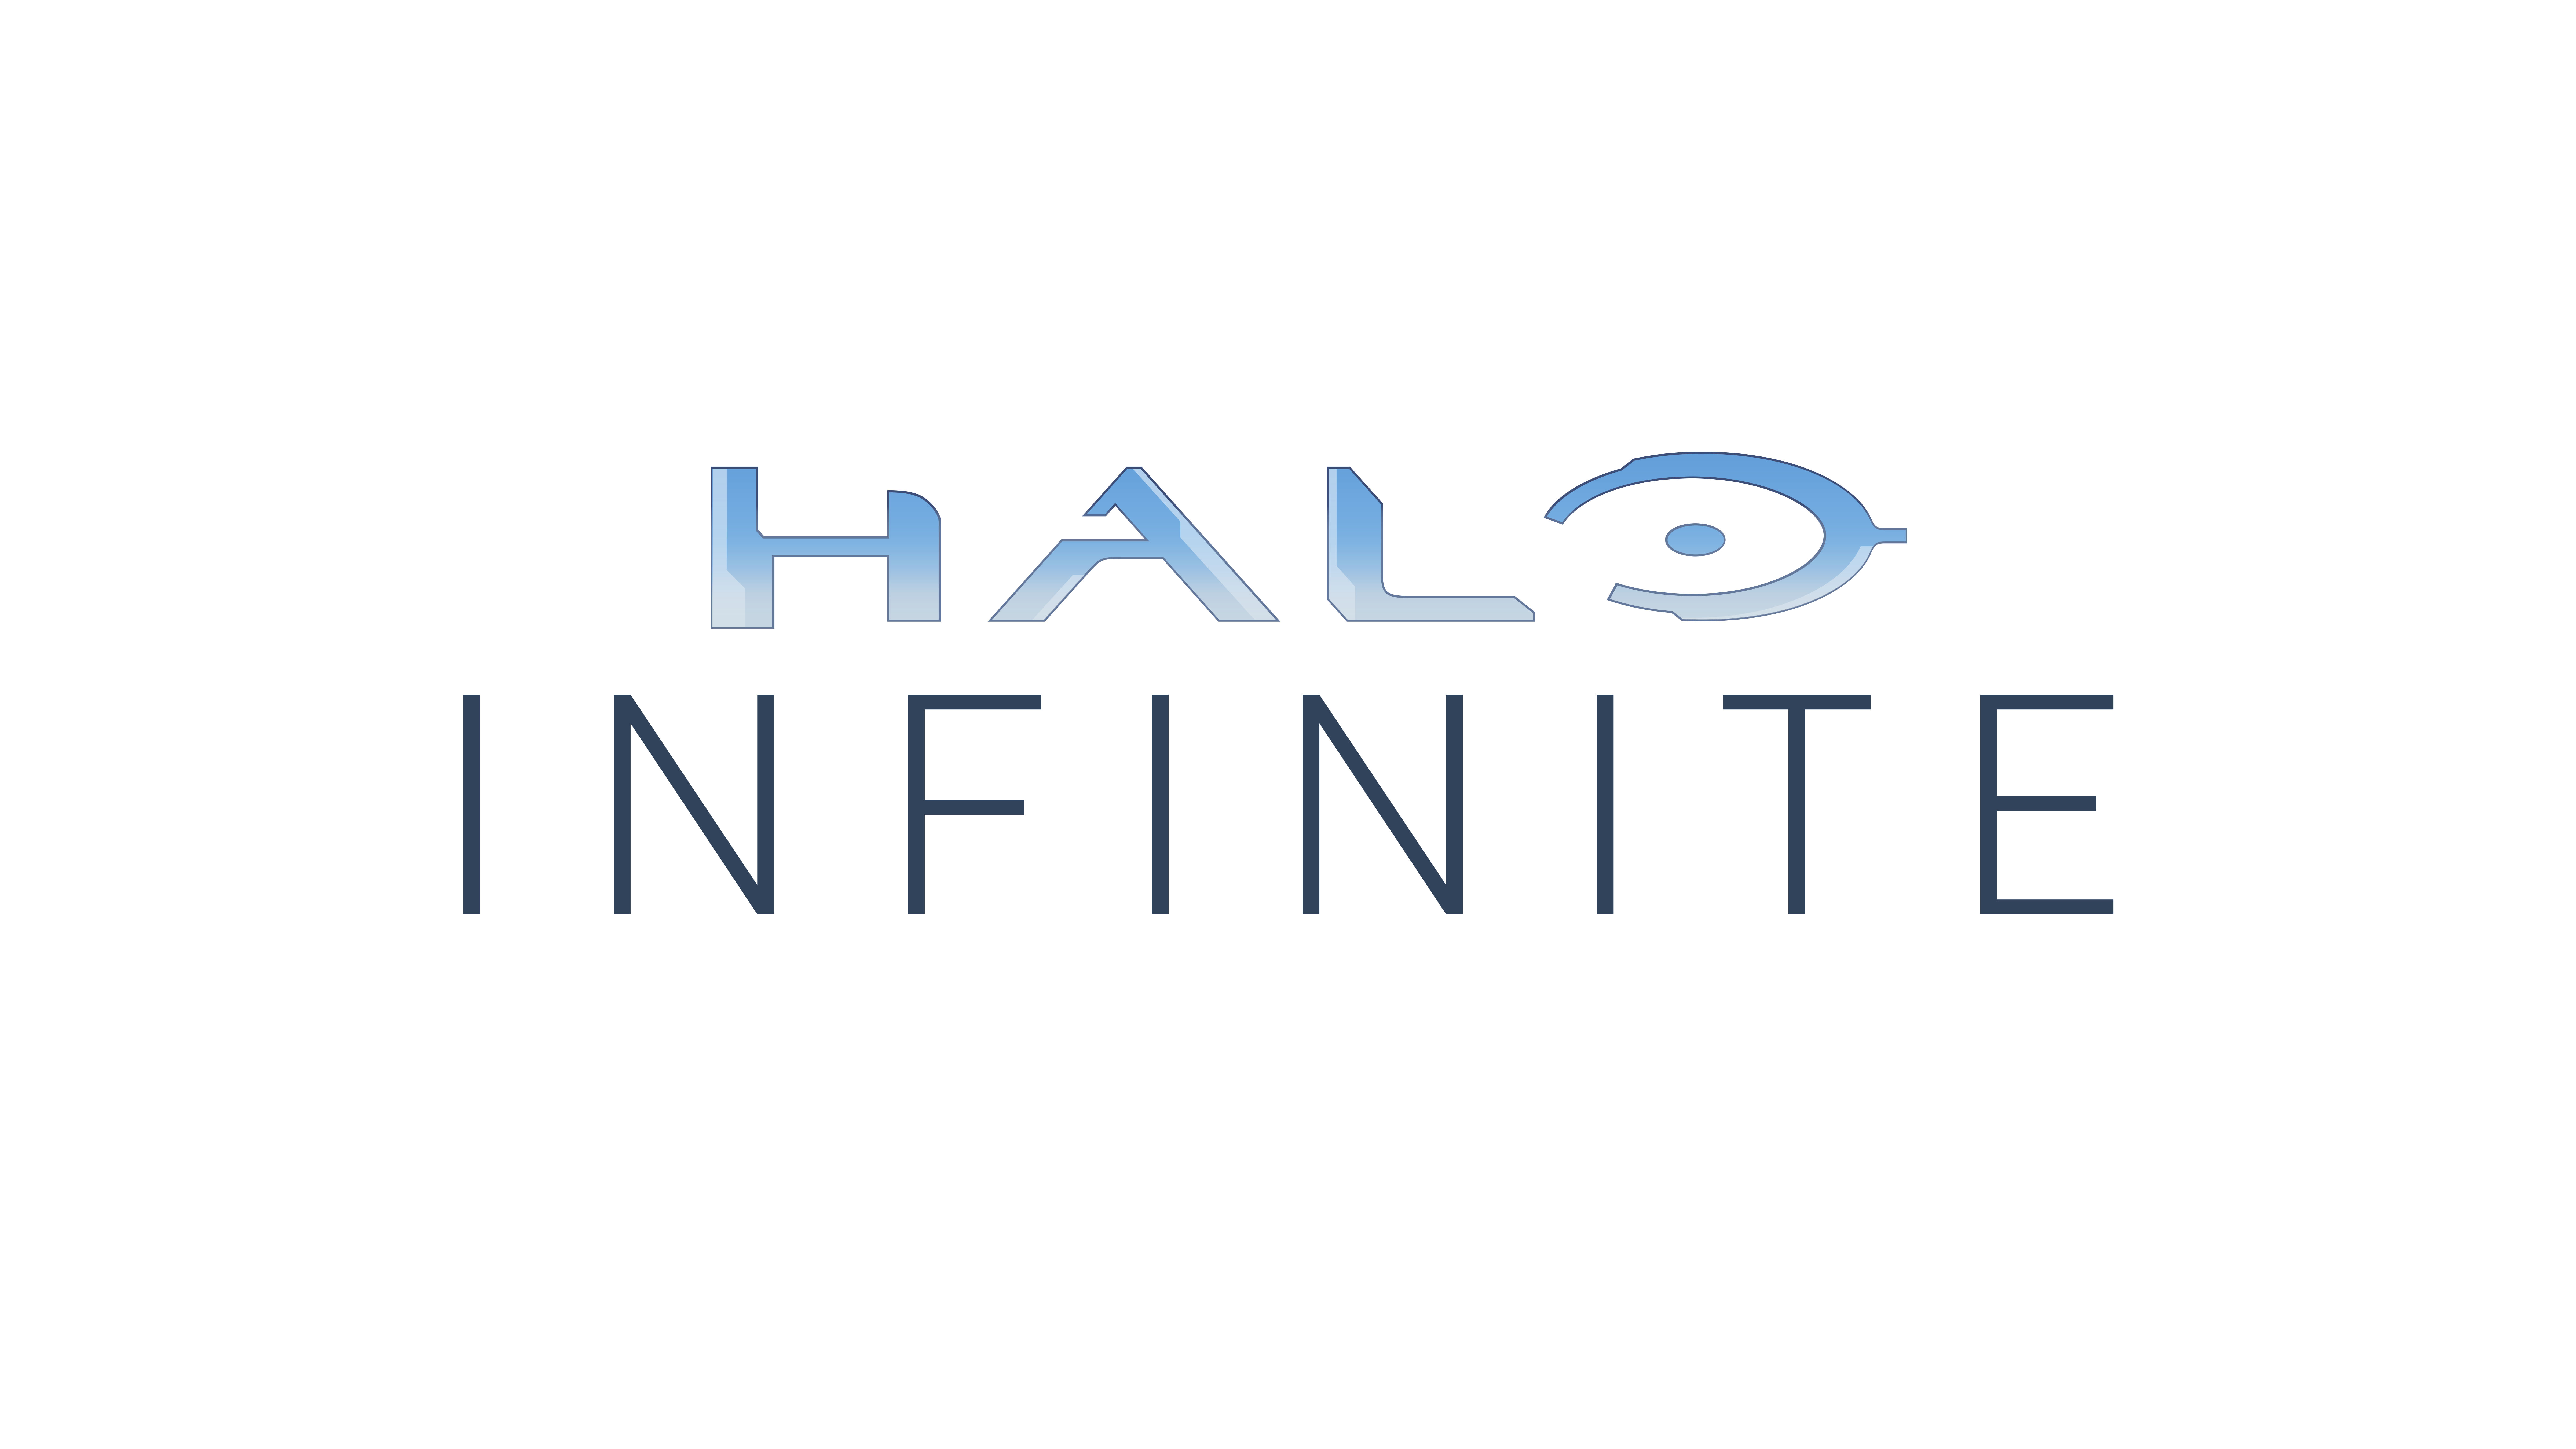 Halo Infinite